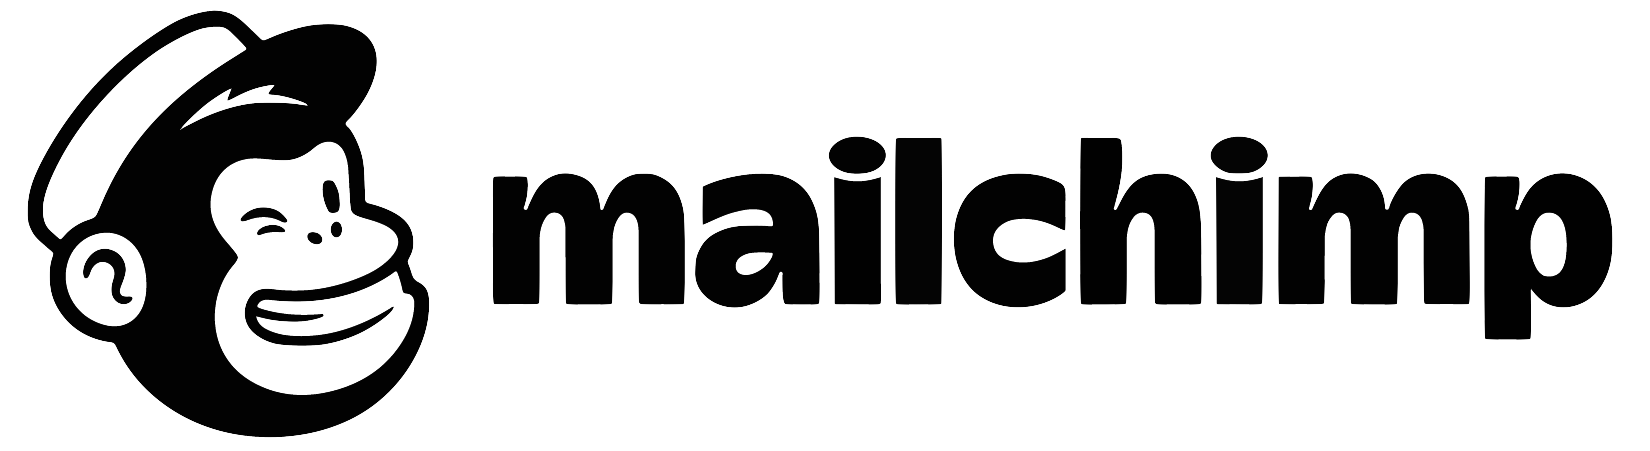 new-mailchimp-logo.png